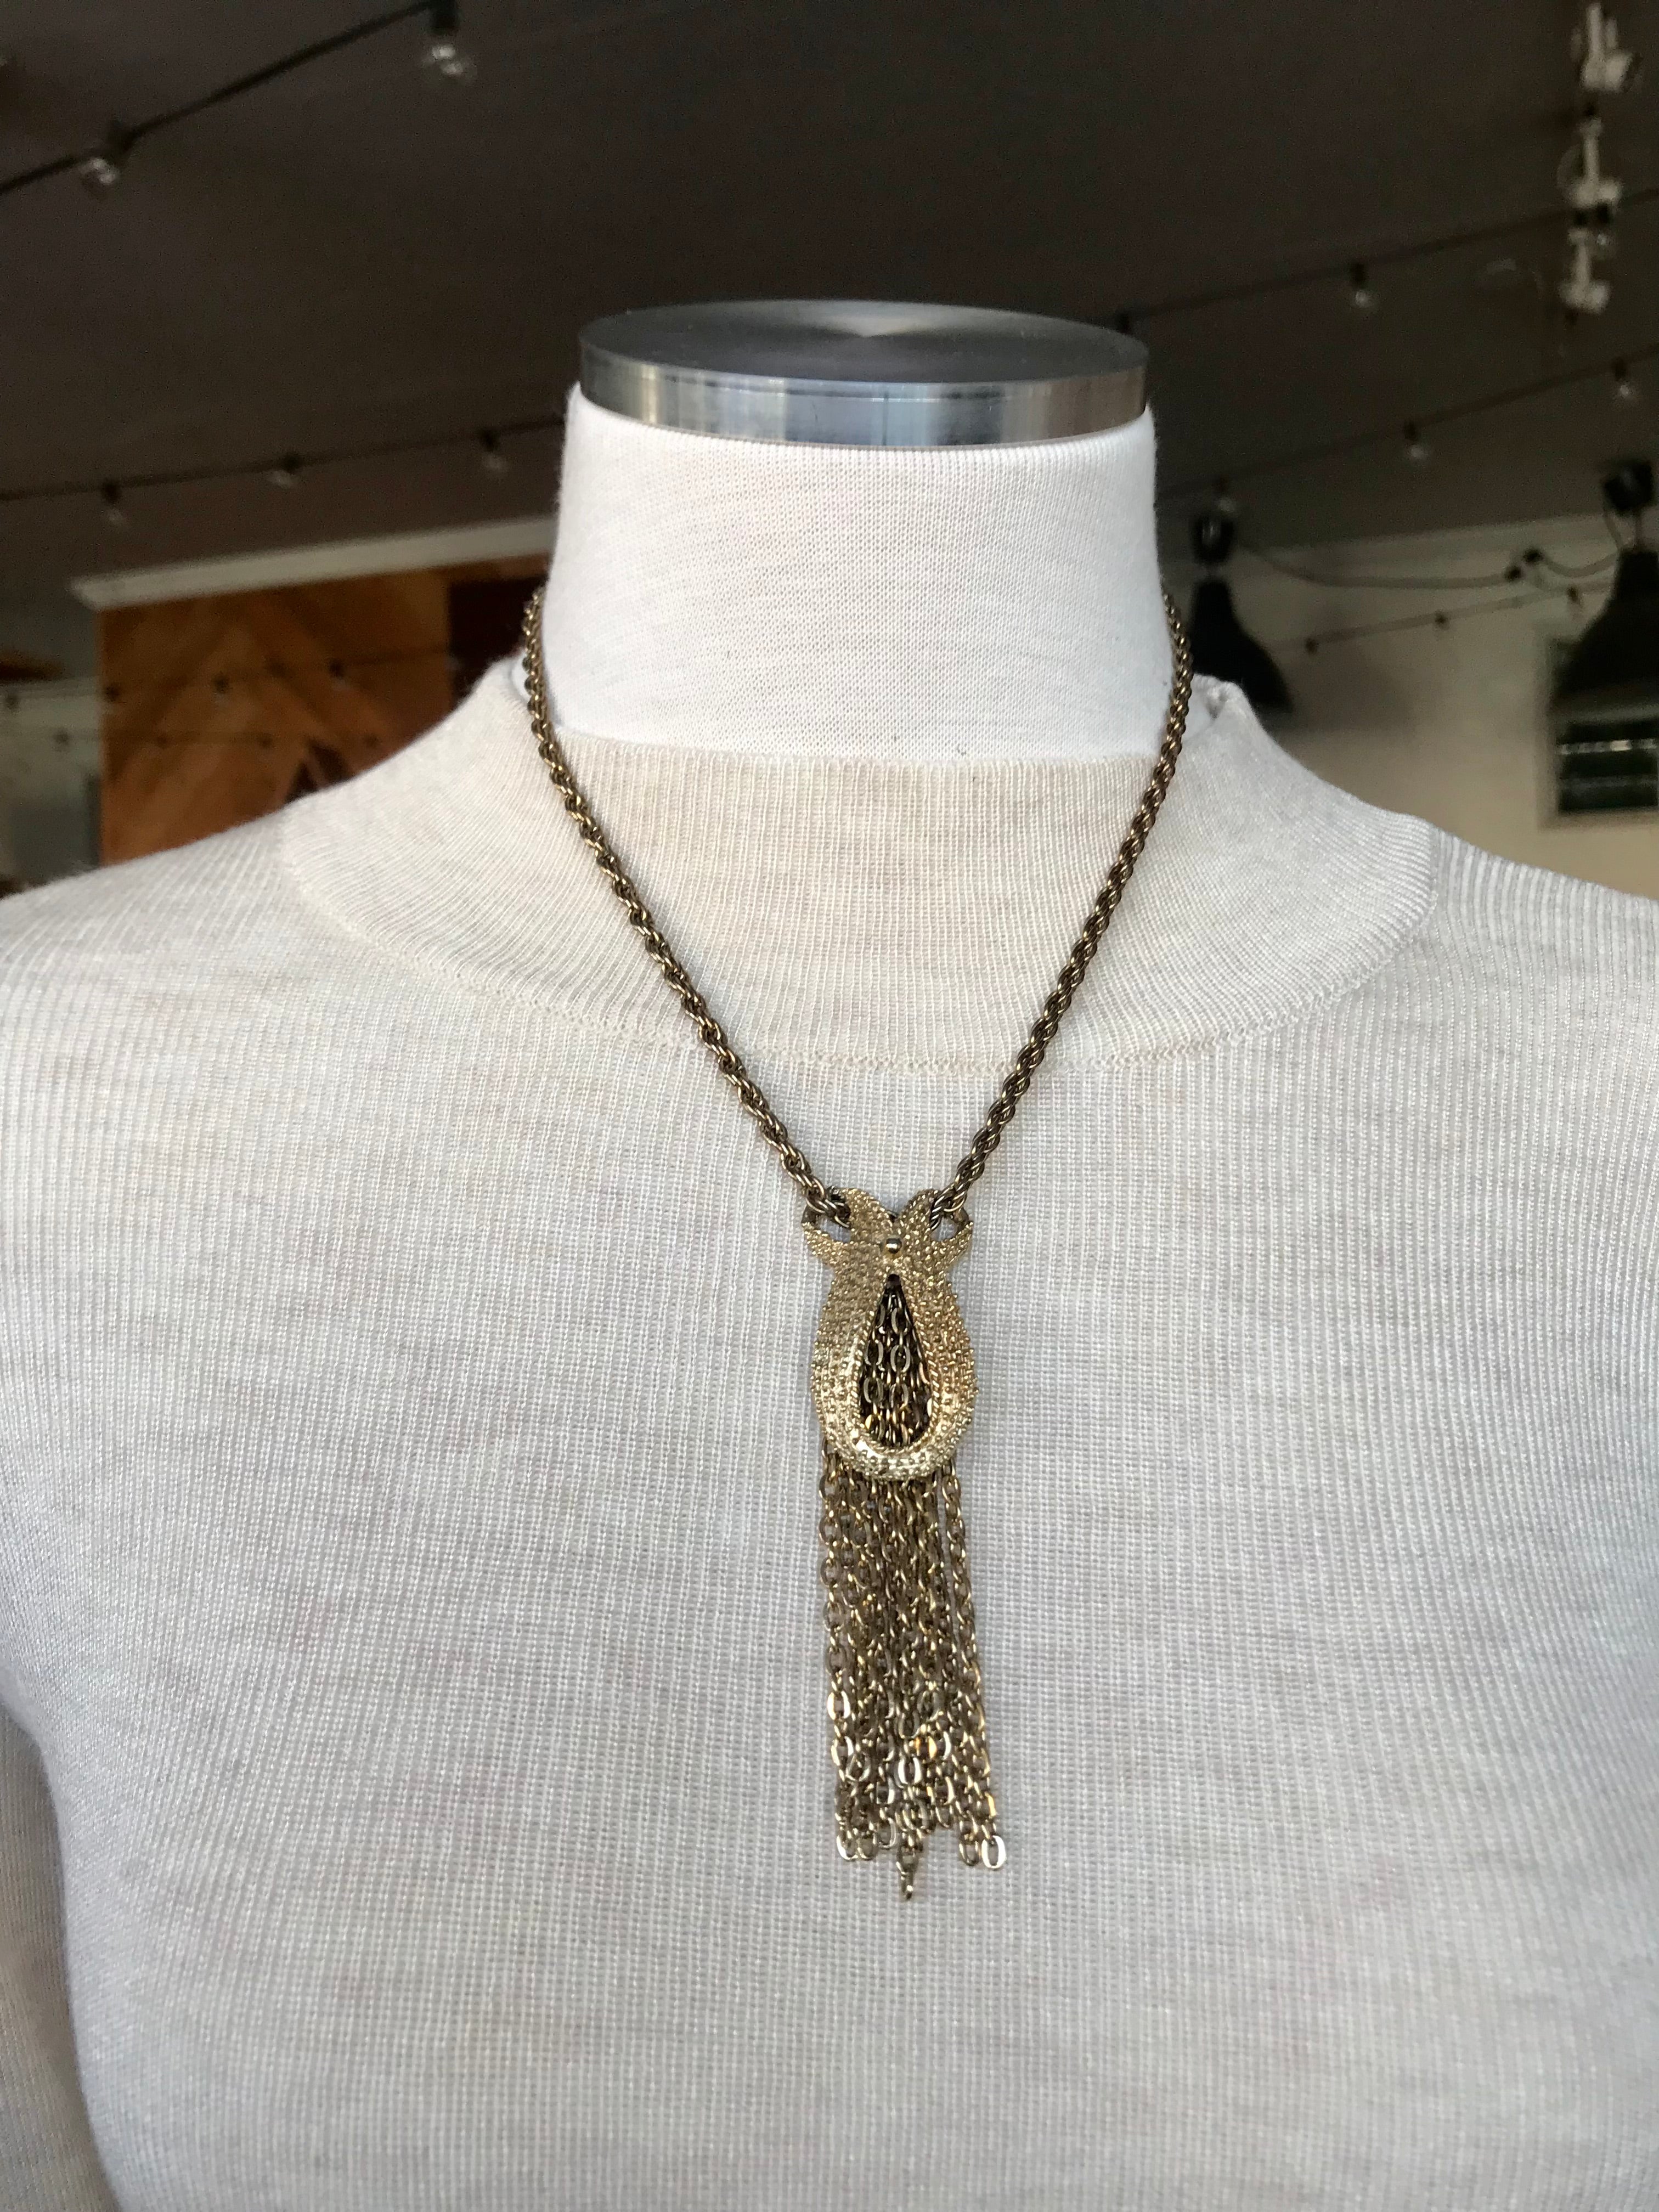 Monet Jewelry Tassel 30 Inch Snake Pendant Necklace - JCPenney